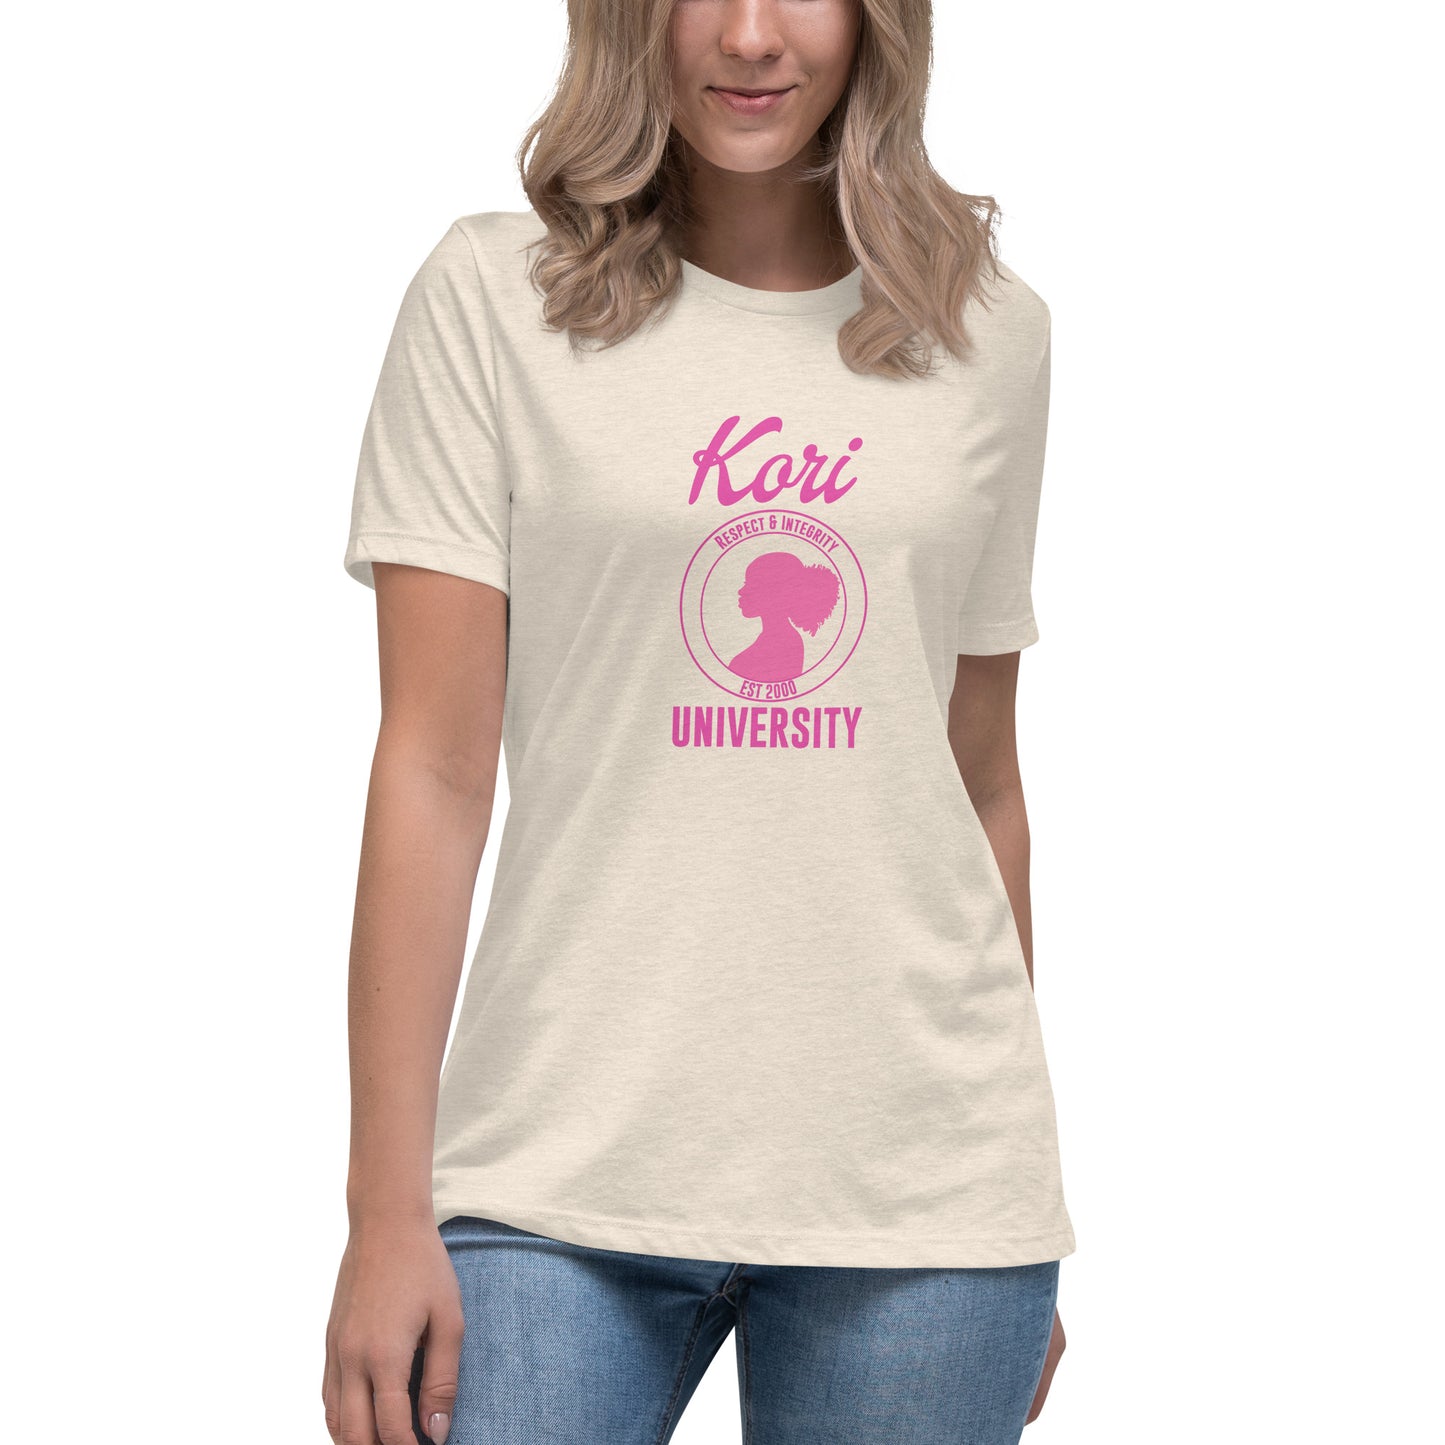 KORI UNIVERSITY - Women's Relaxed T-Shirt